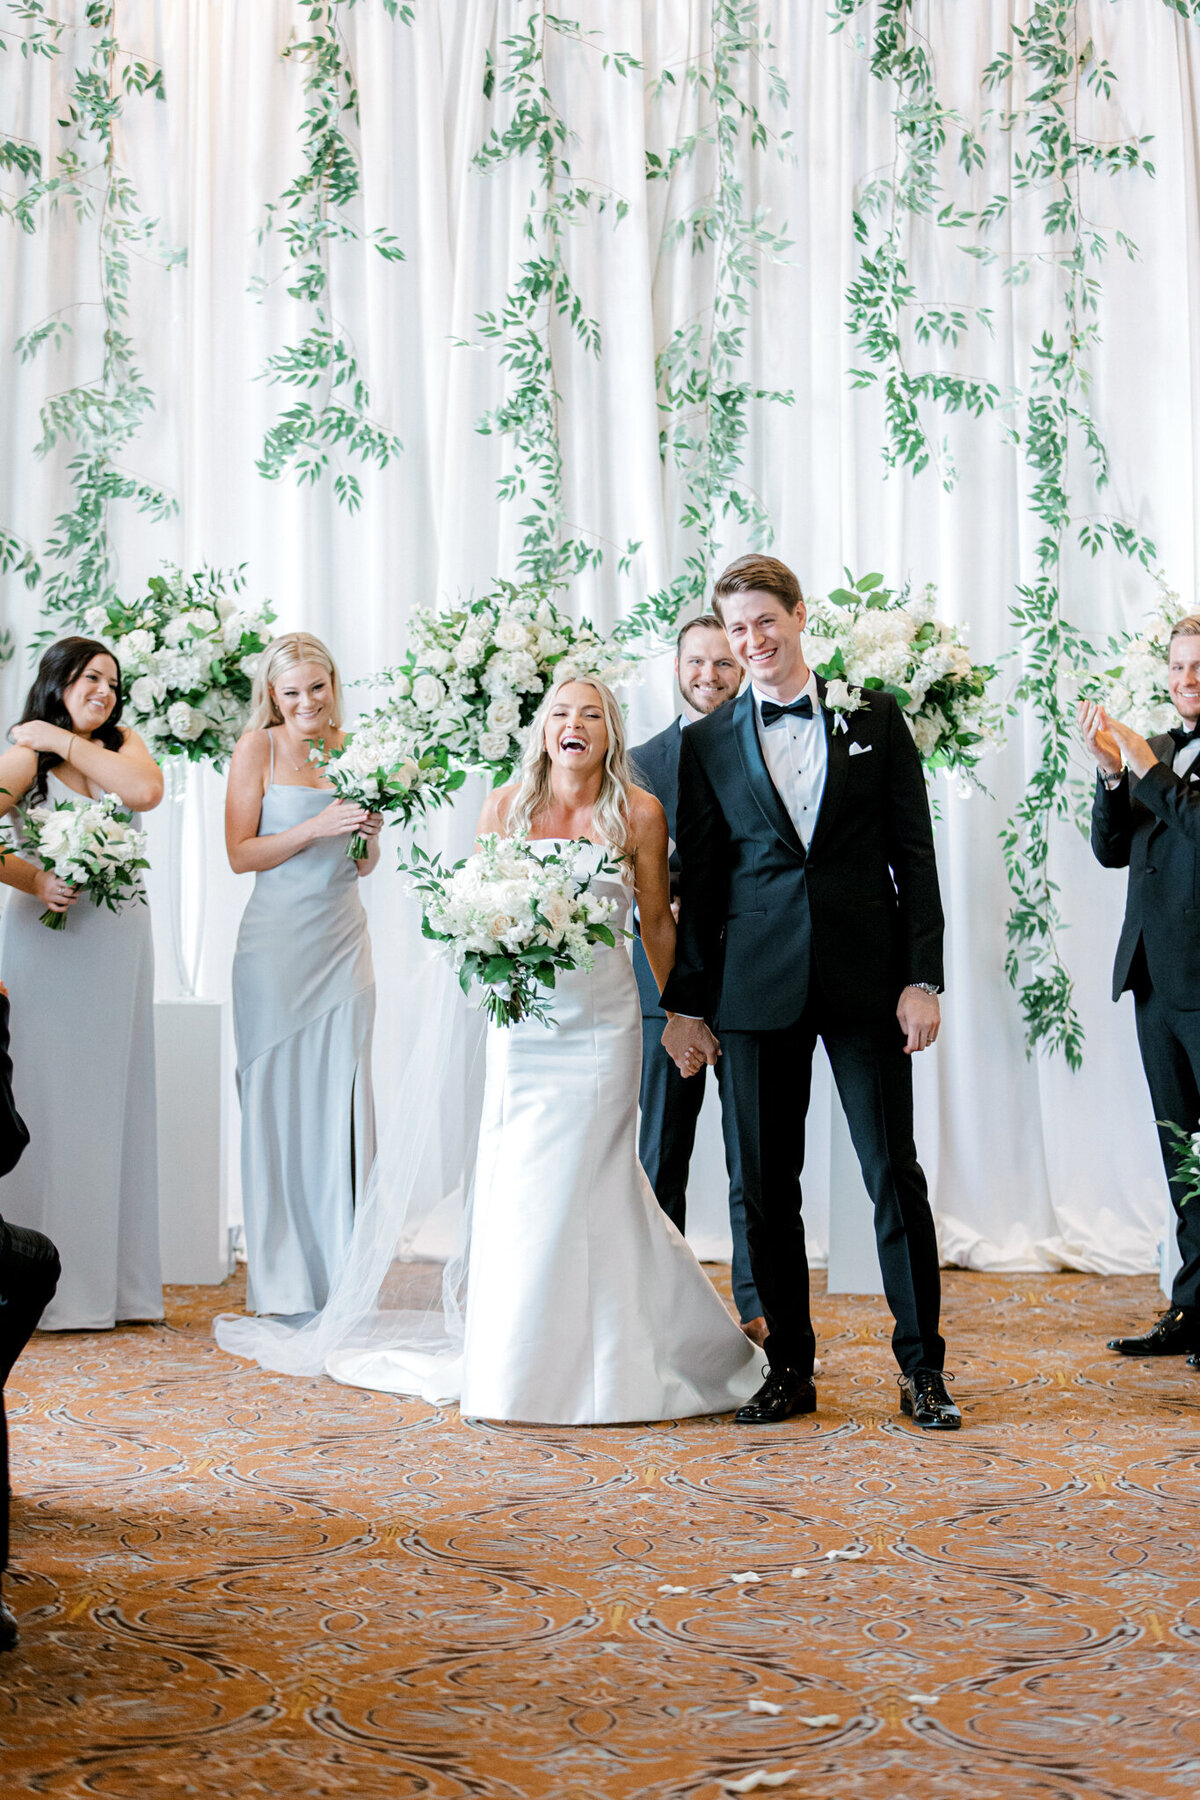 Madison & Michael's Wedding at Union Station | Dallas Wedding Photographer | Sami Kathryn Photography-130